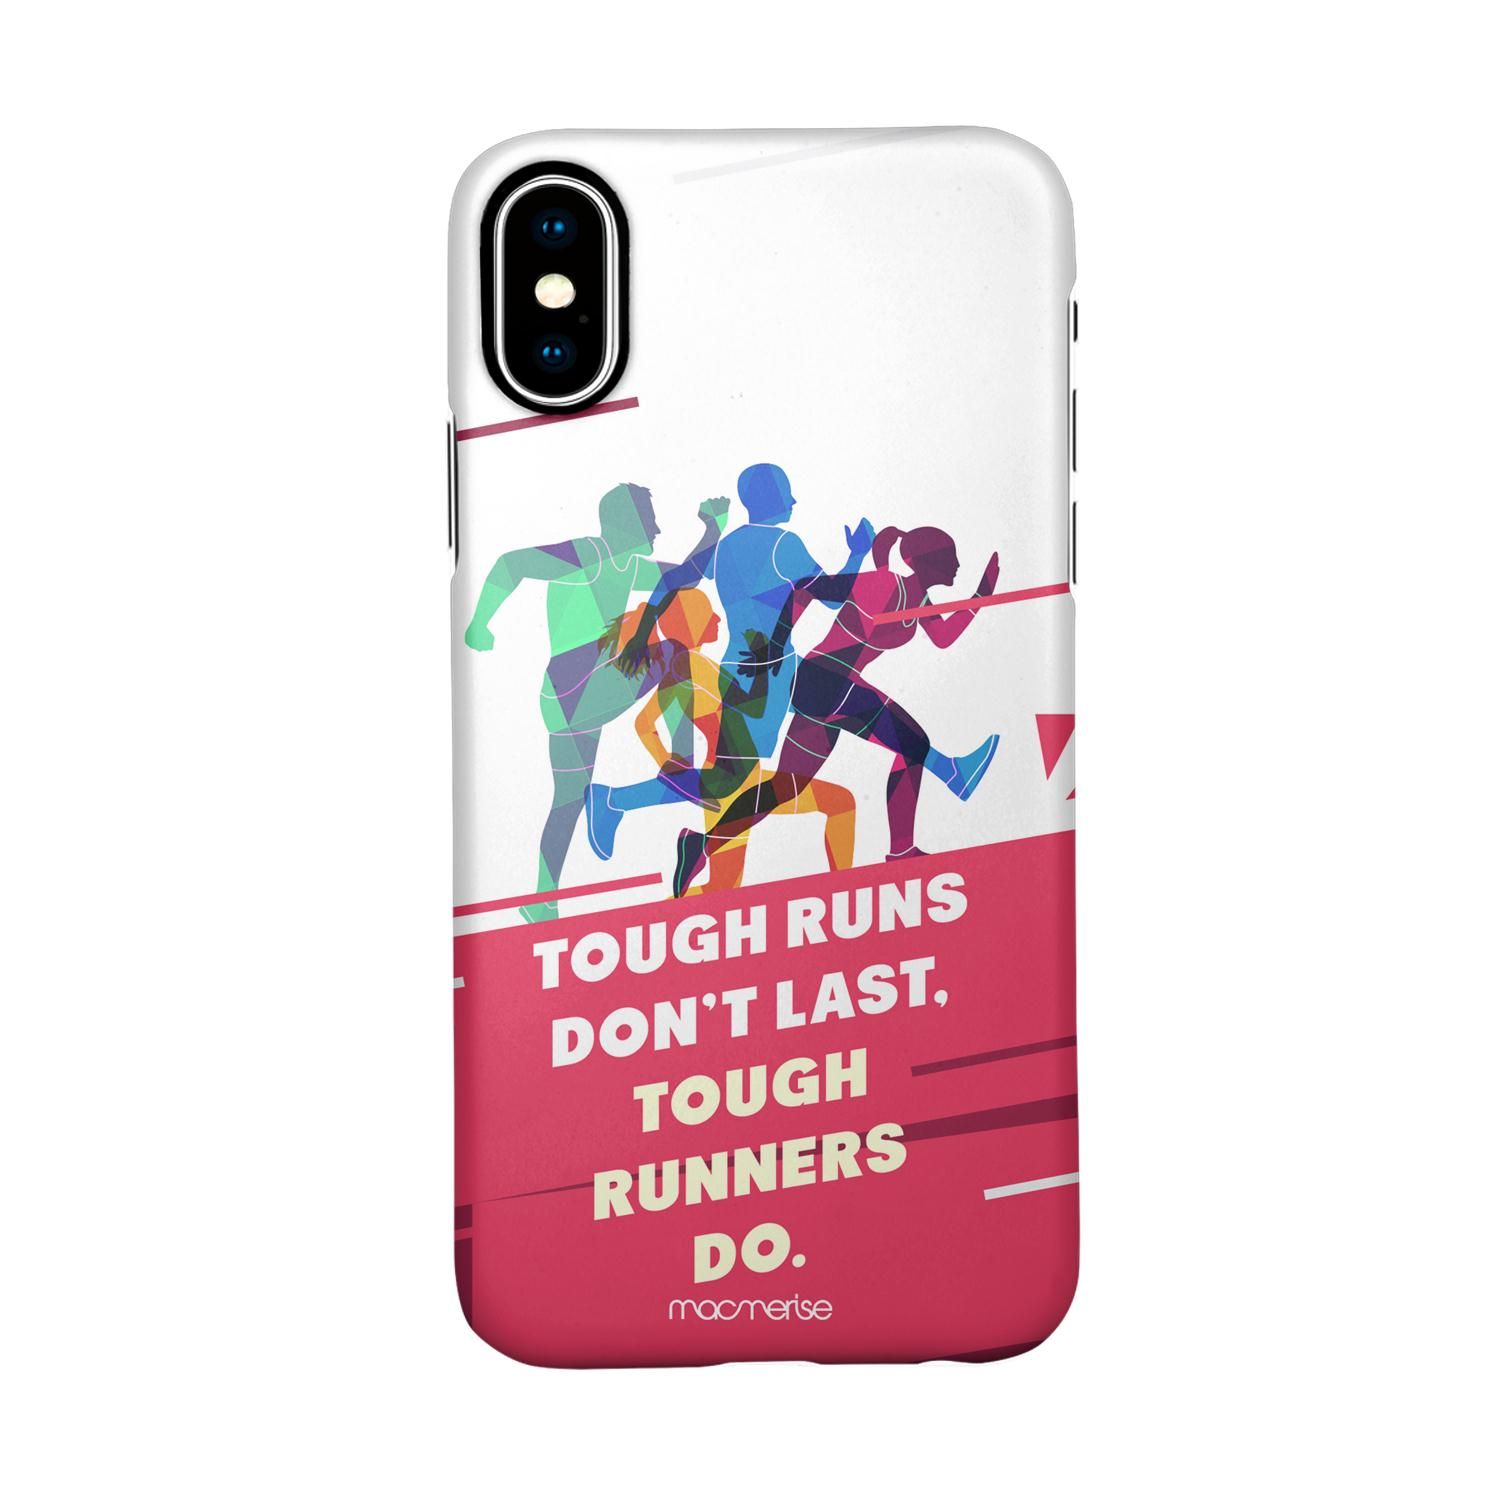 Tough Runners - Sleek Phone Case for iPhone XS